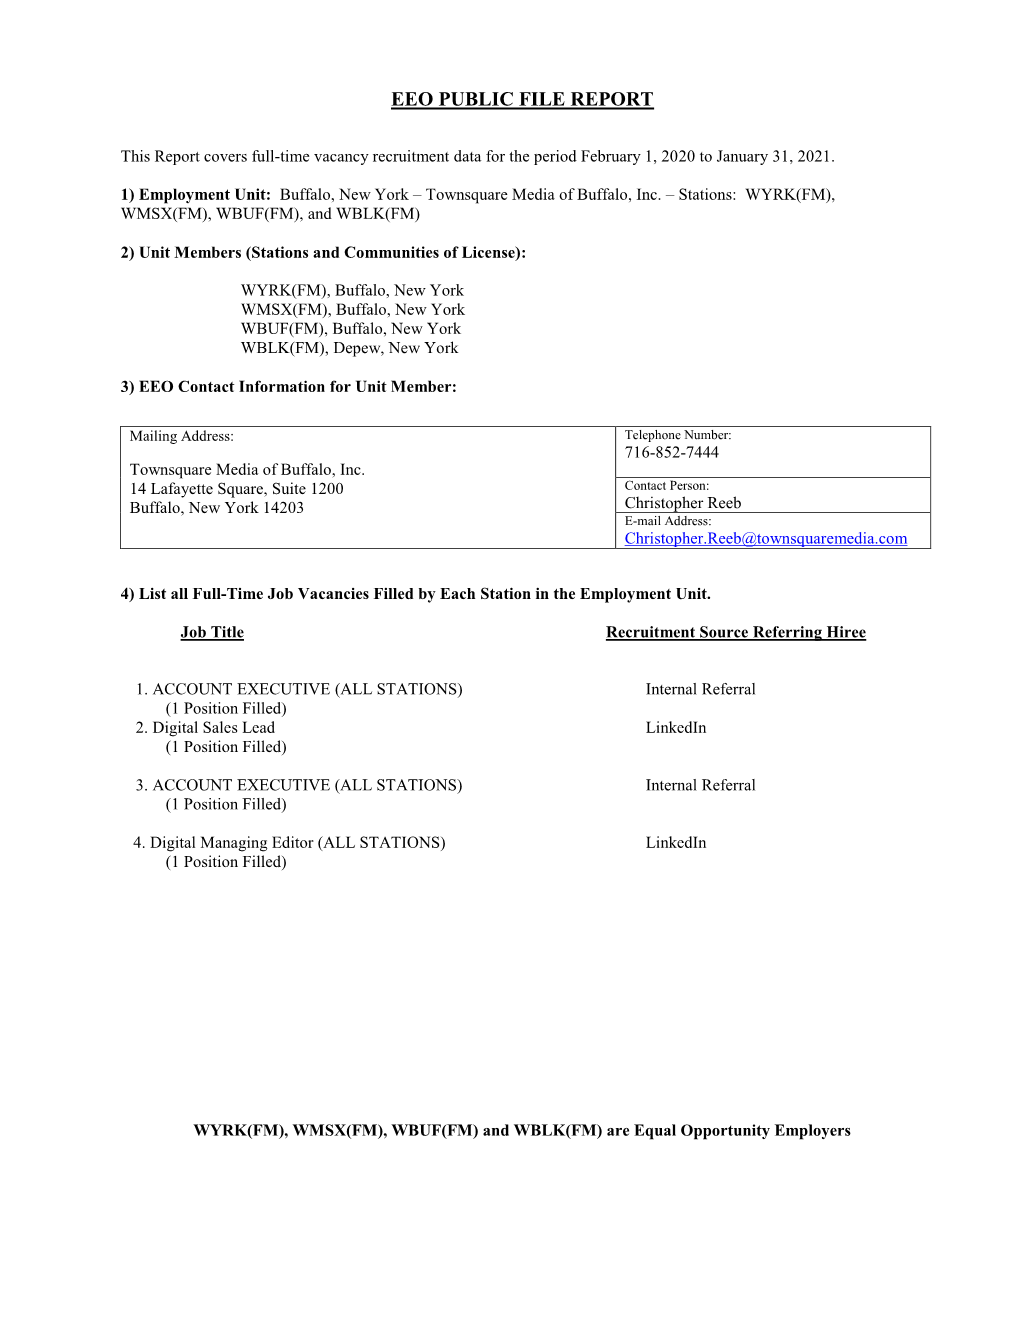 Townsquare Media Buffalo EEO Public File Report 2020-2021